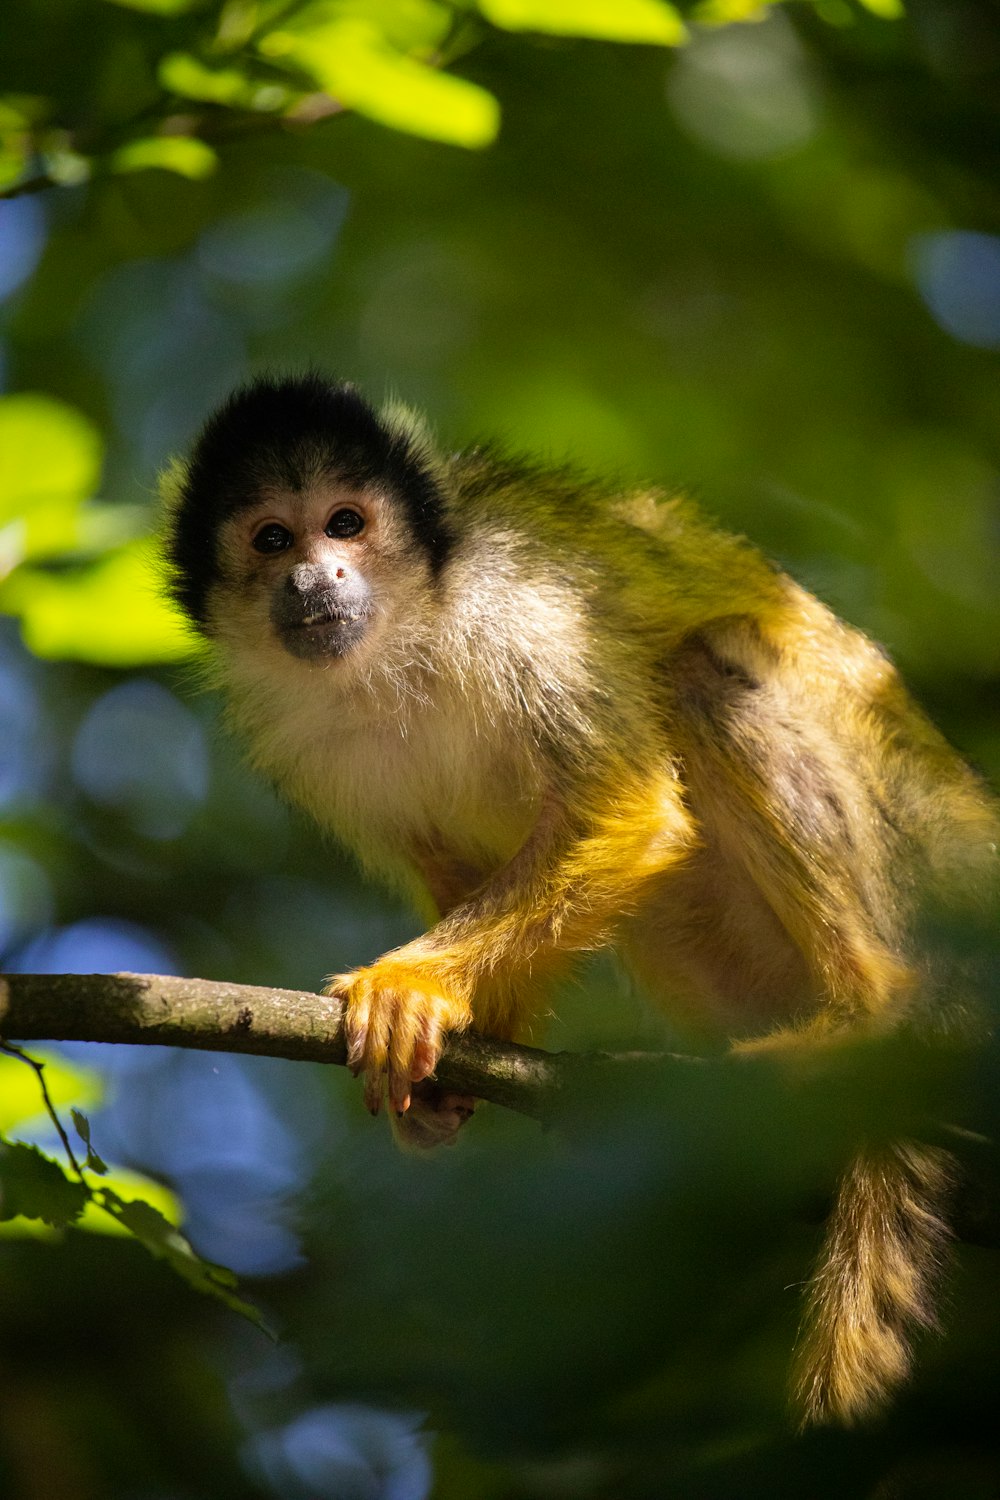 a monkey on a branch